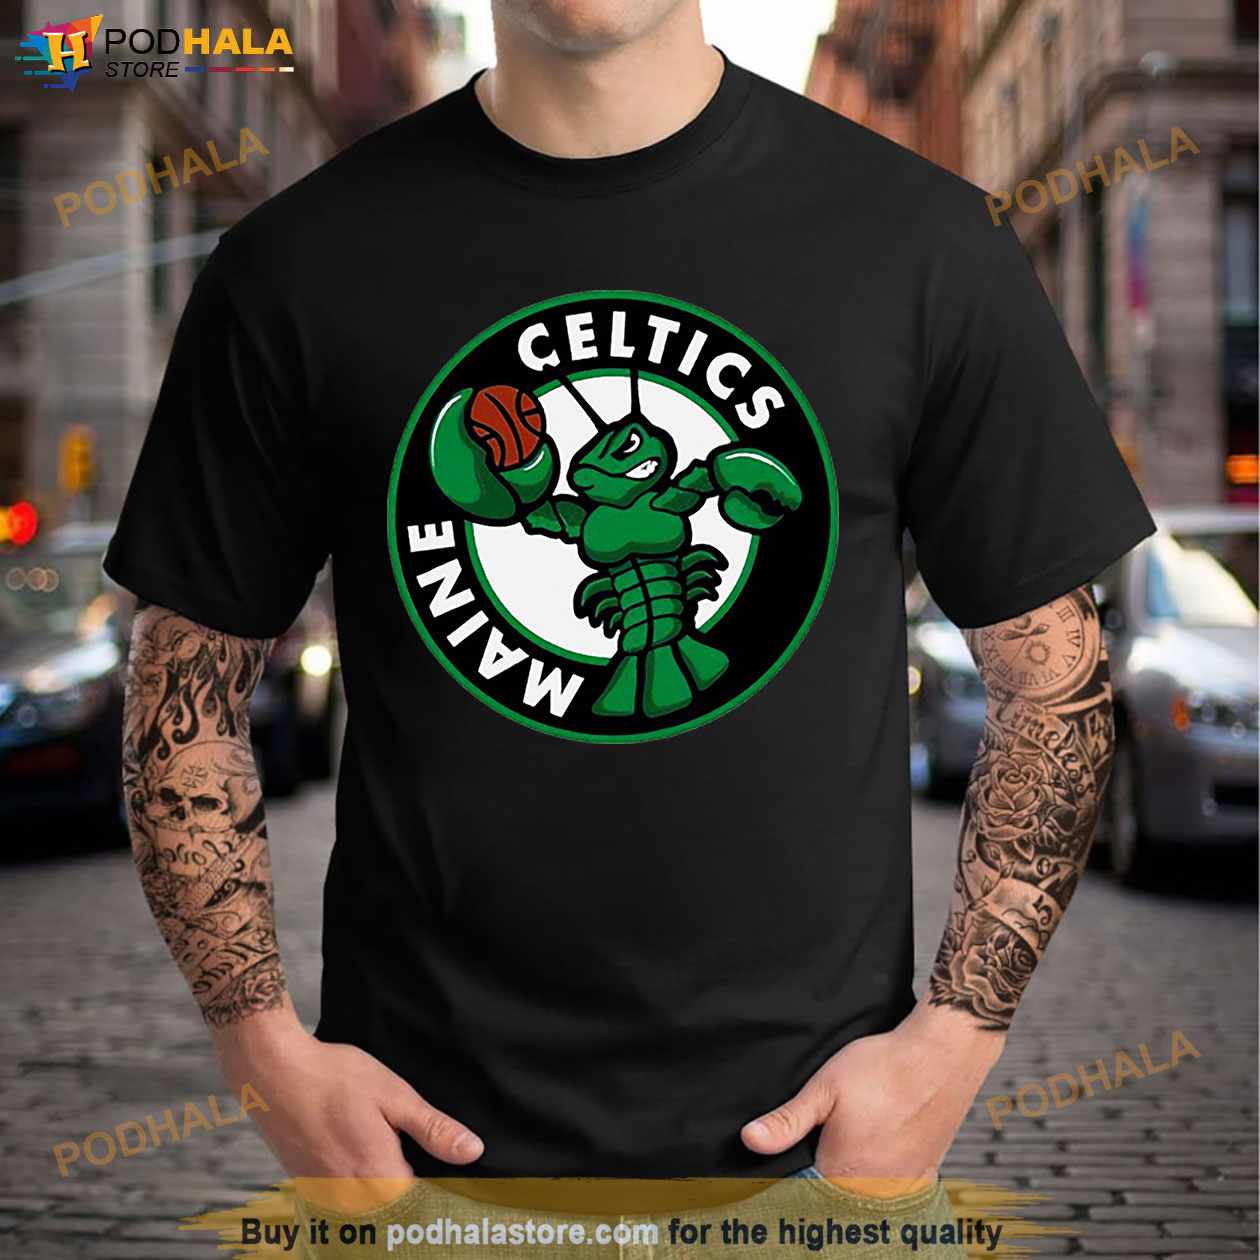 celtics training shirt